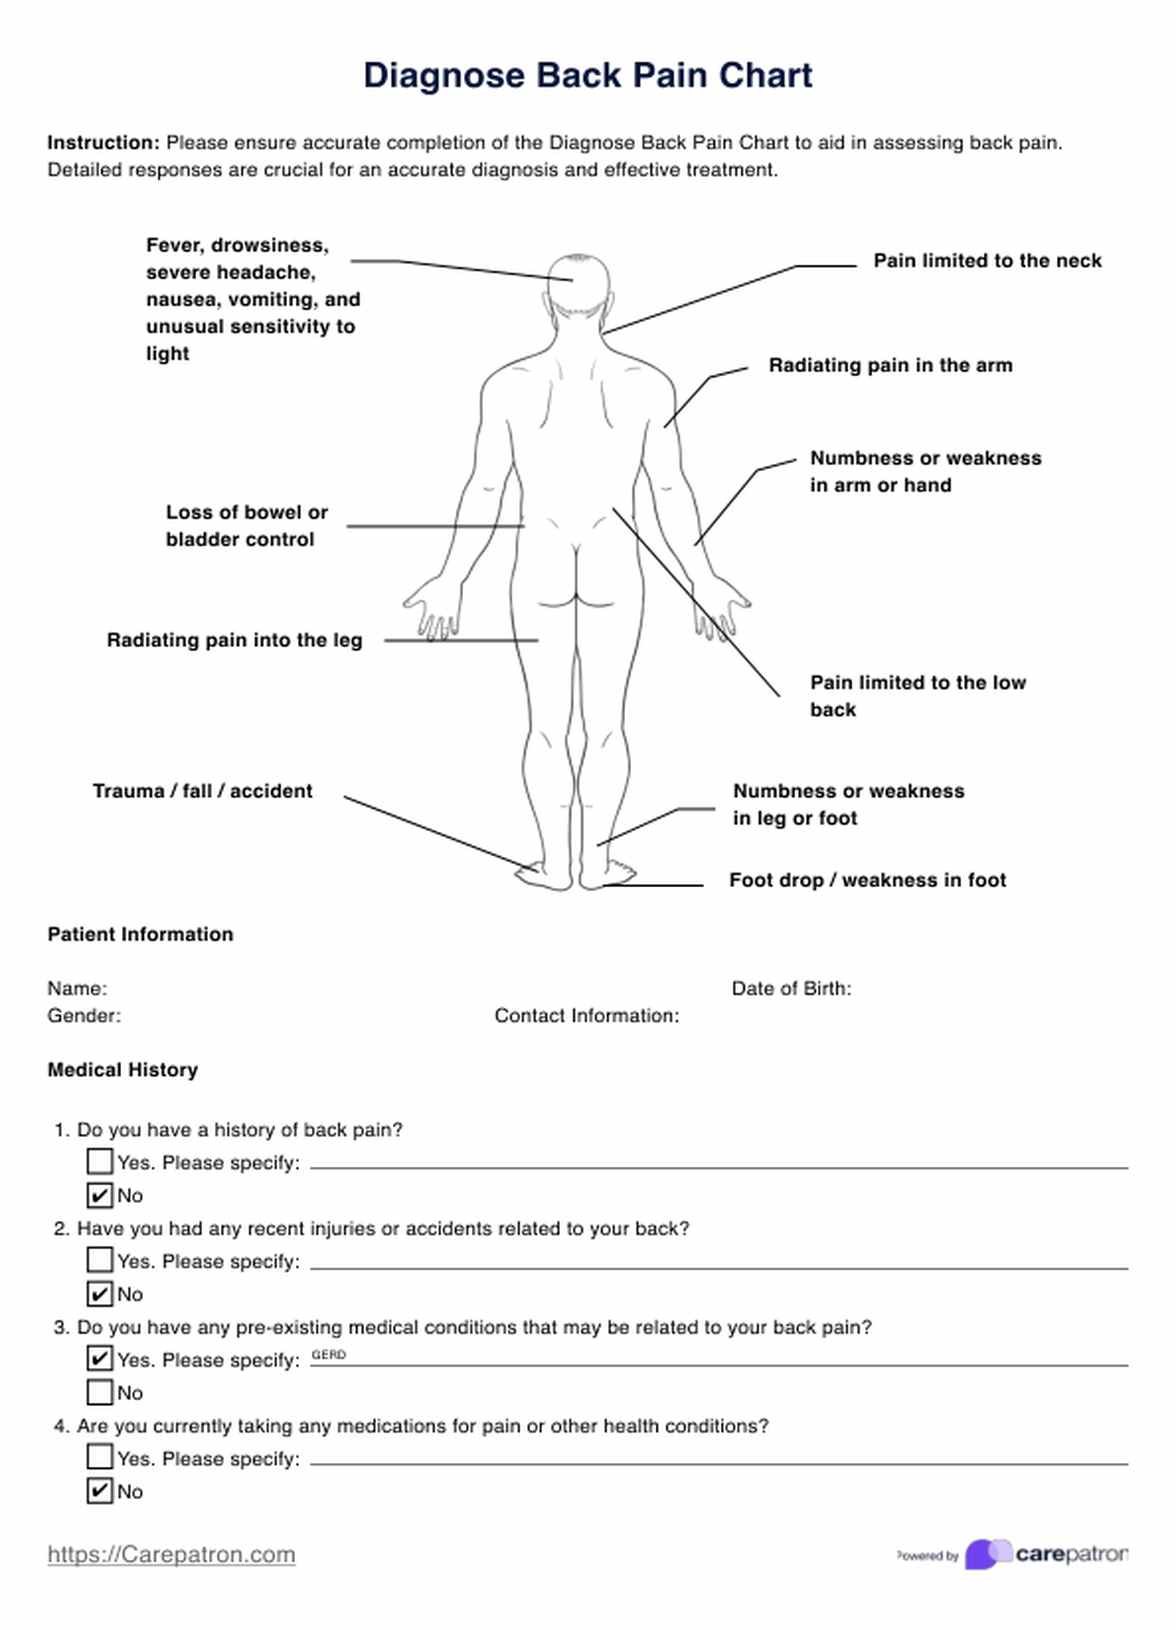 Diagnose Back Pain Charts PDF Example